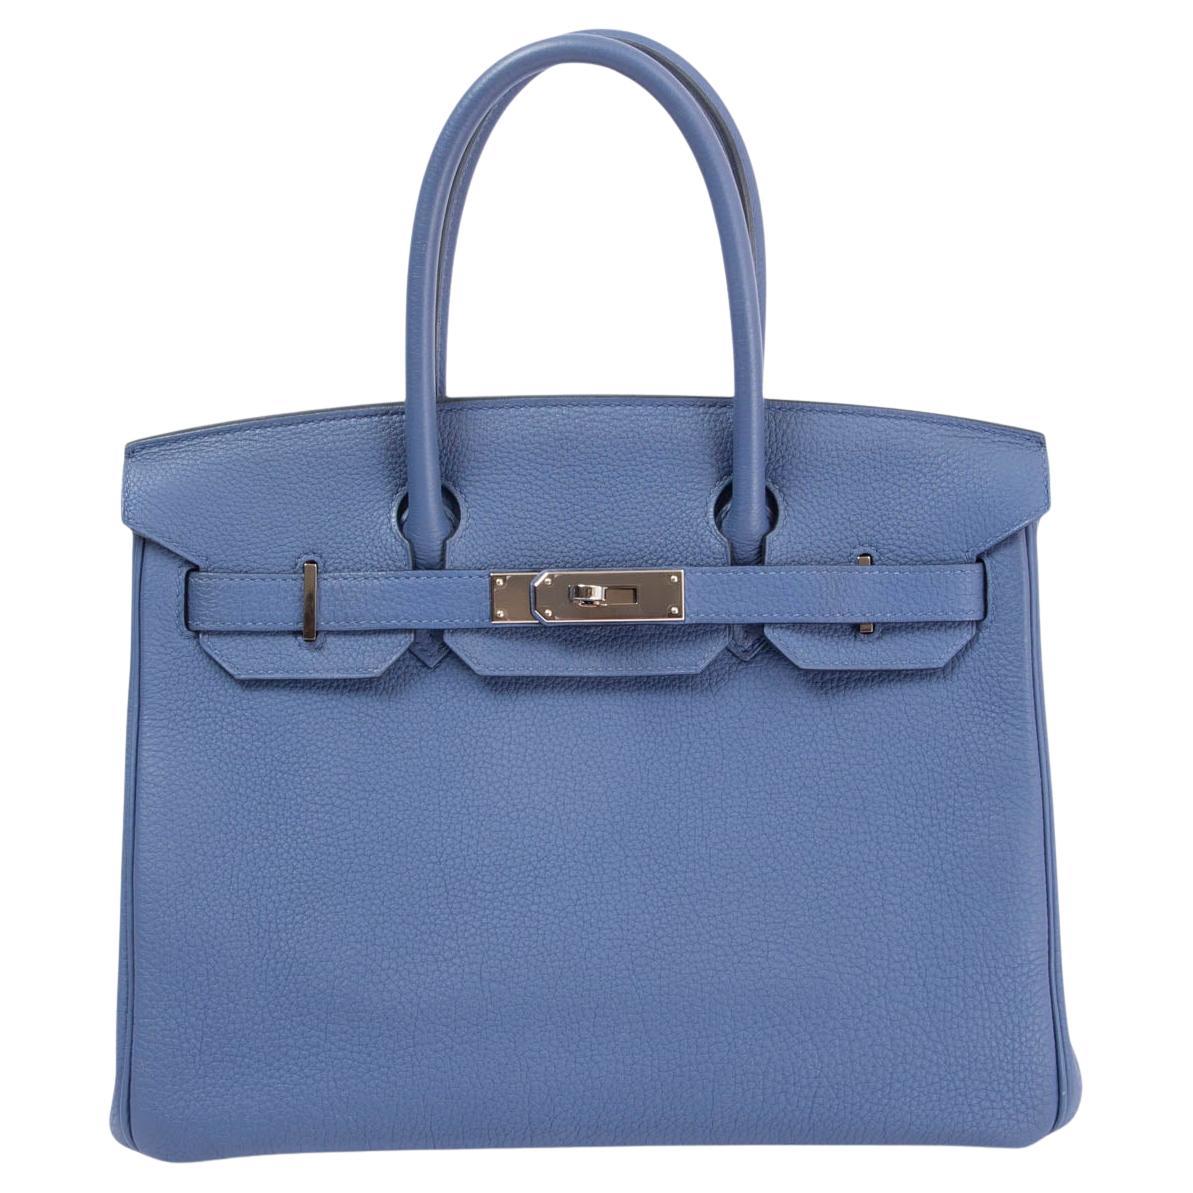 HERMES Bleu Brighton Blue Togo leather BIRKIN 30 Bag Palladium